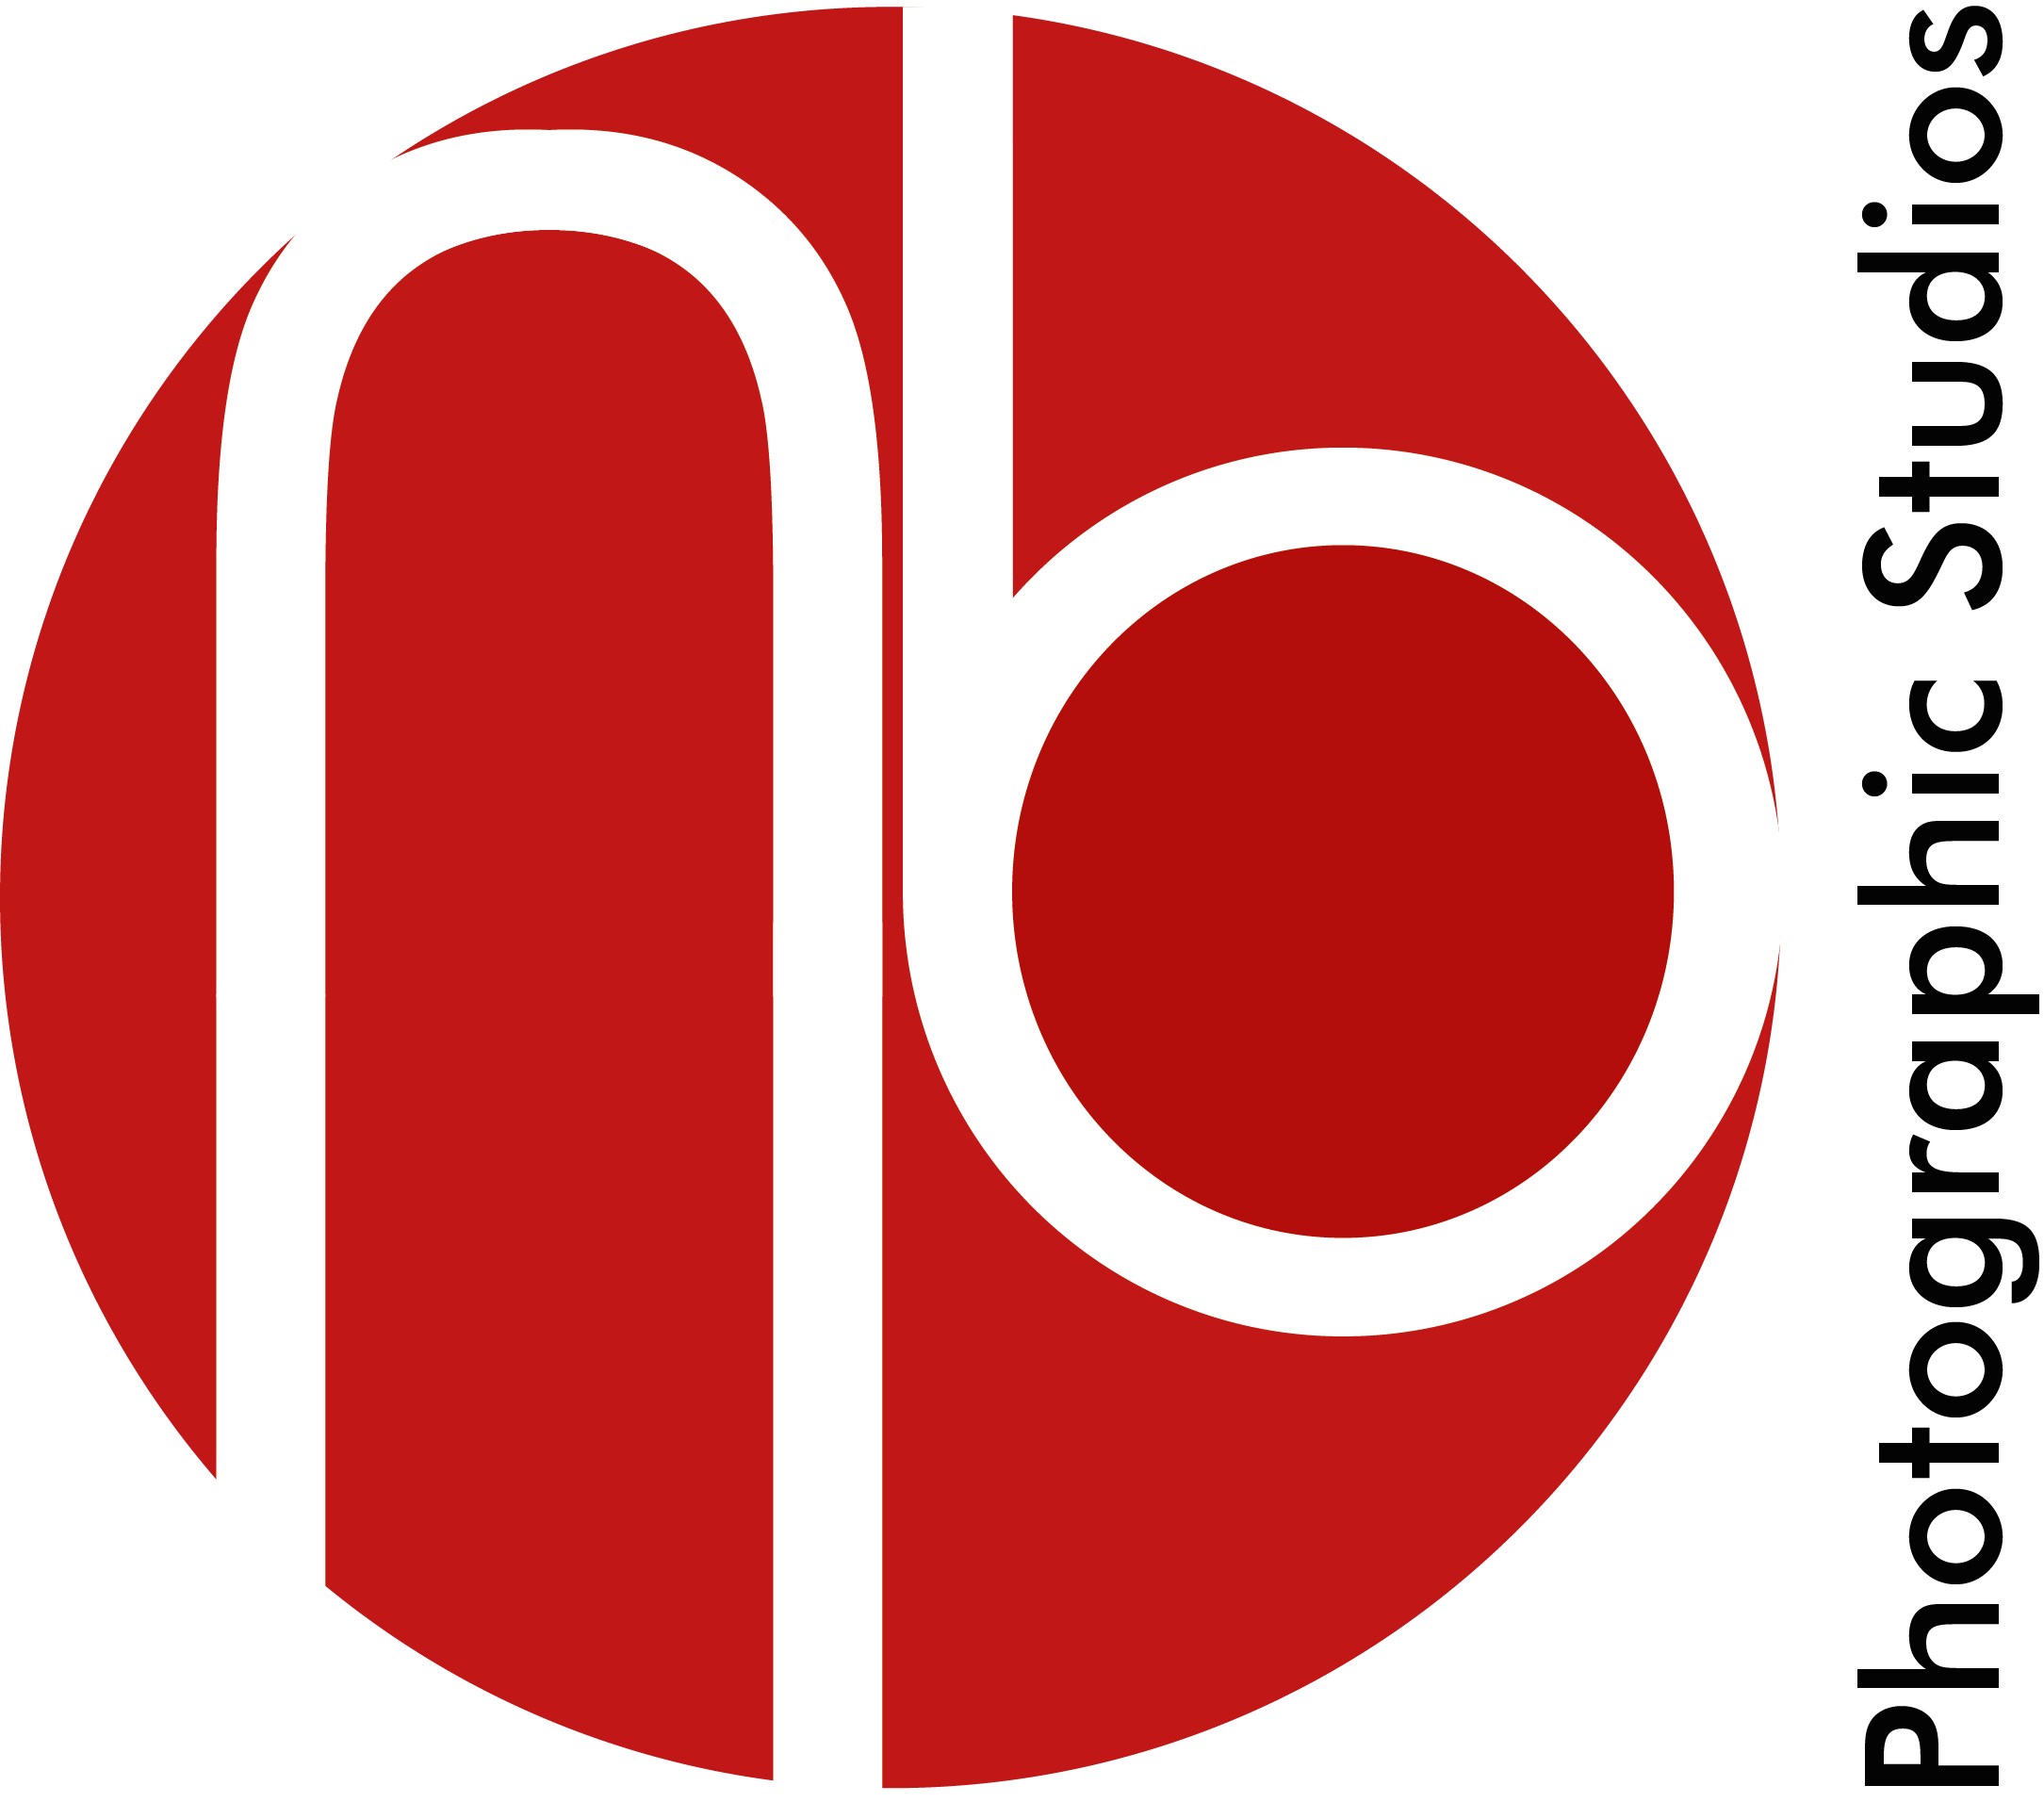 NB Photographic Studios Logo - Portsmouth, UK based Photography Studio and Restorers